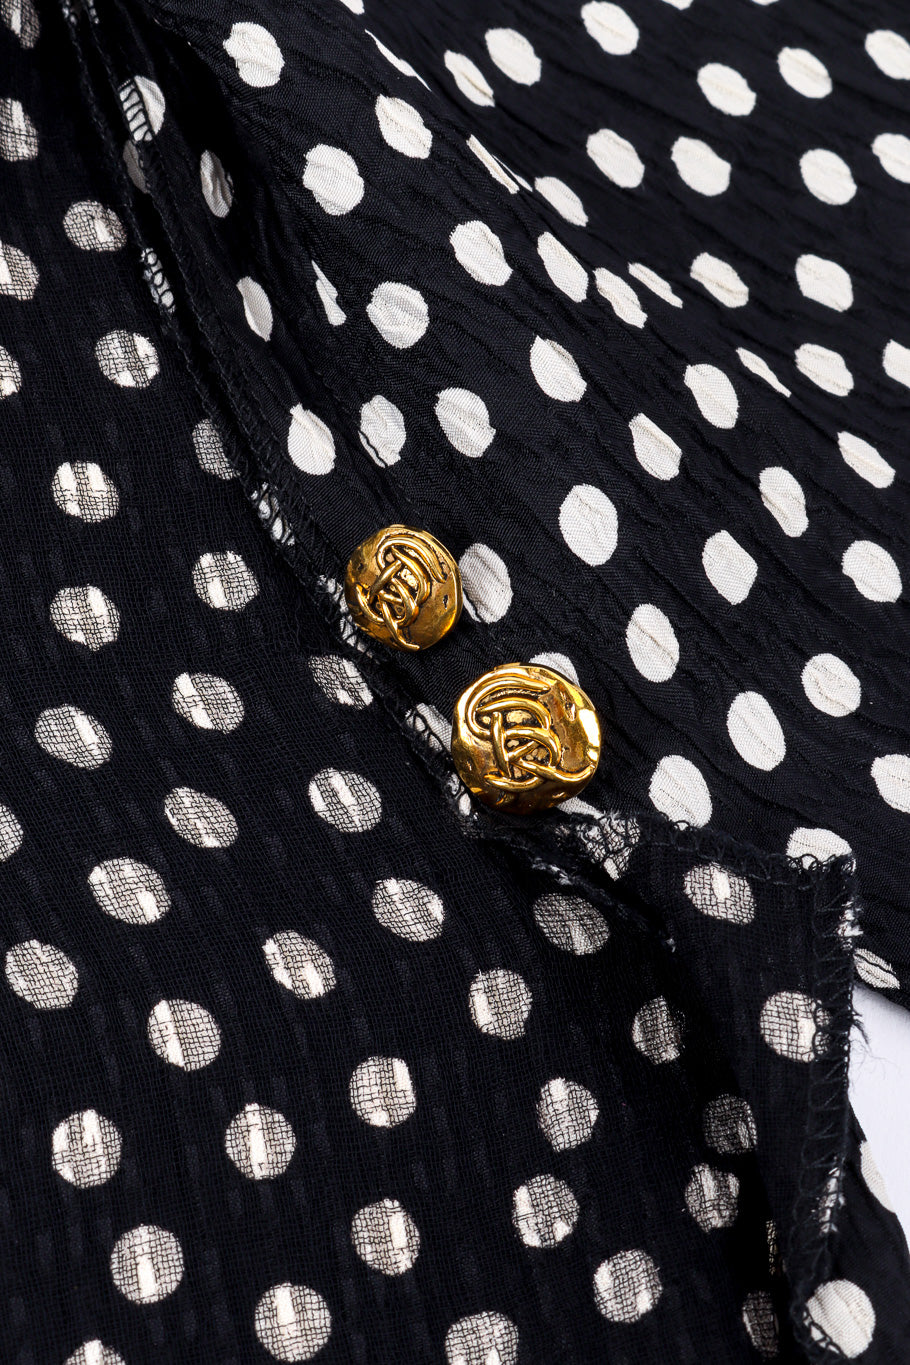 Vintage Sonia Rykiel Polka Dot Jacket and Skirt Set additional buttons closeup @recessla